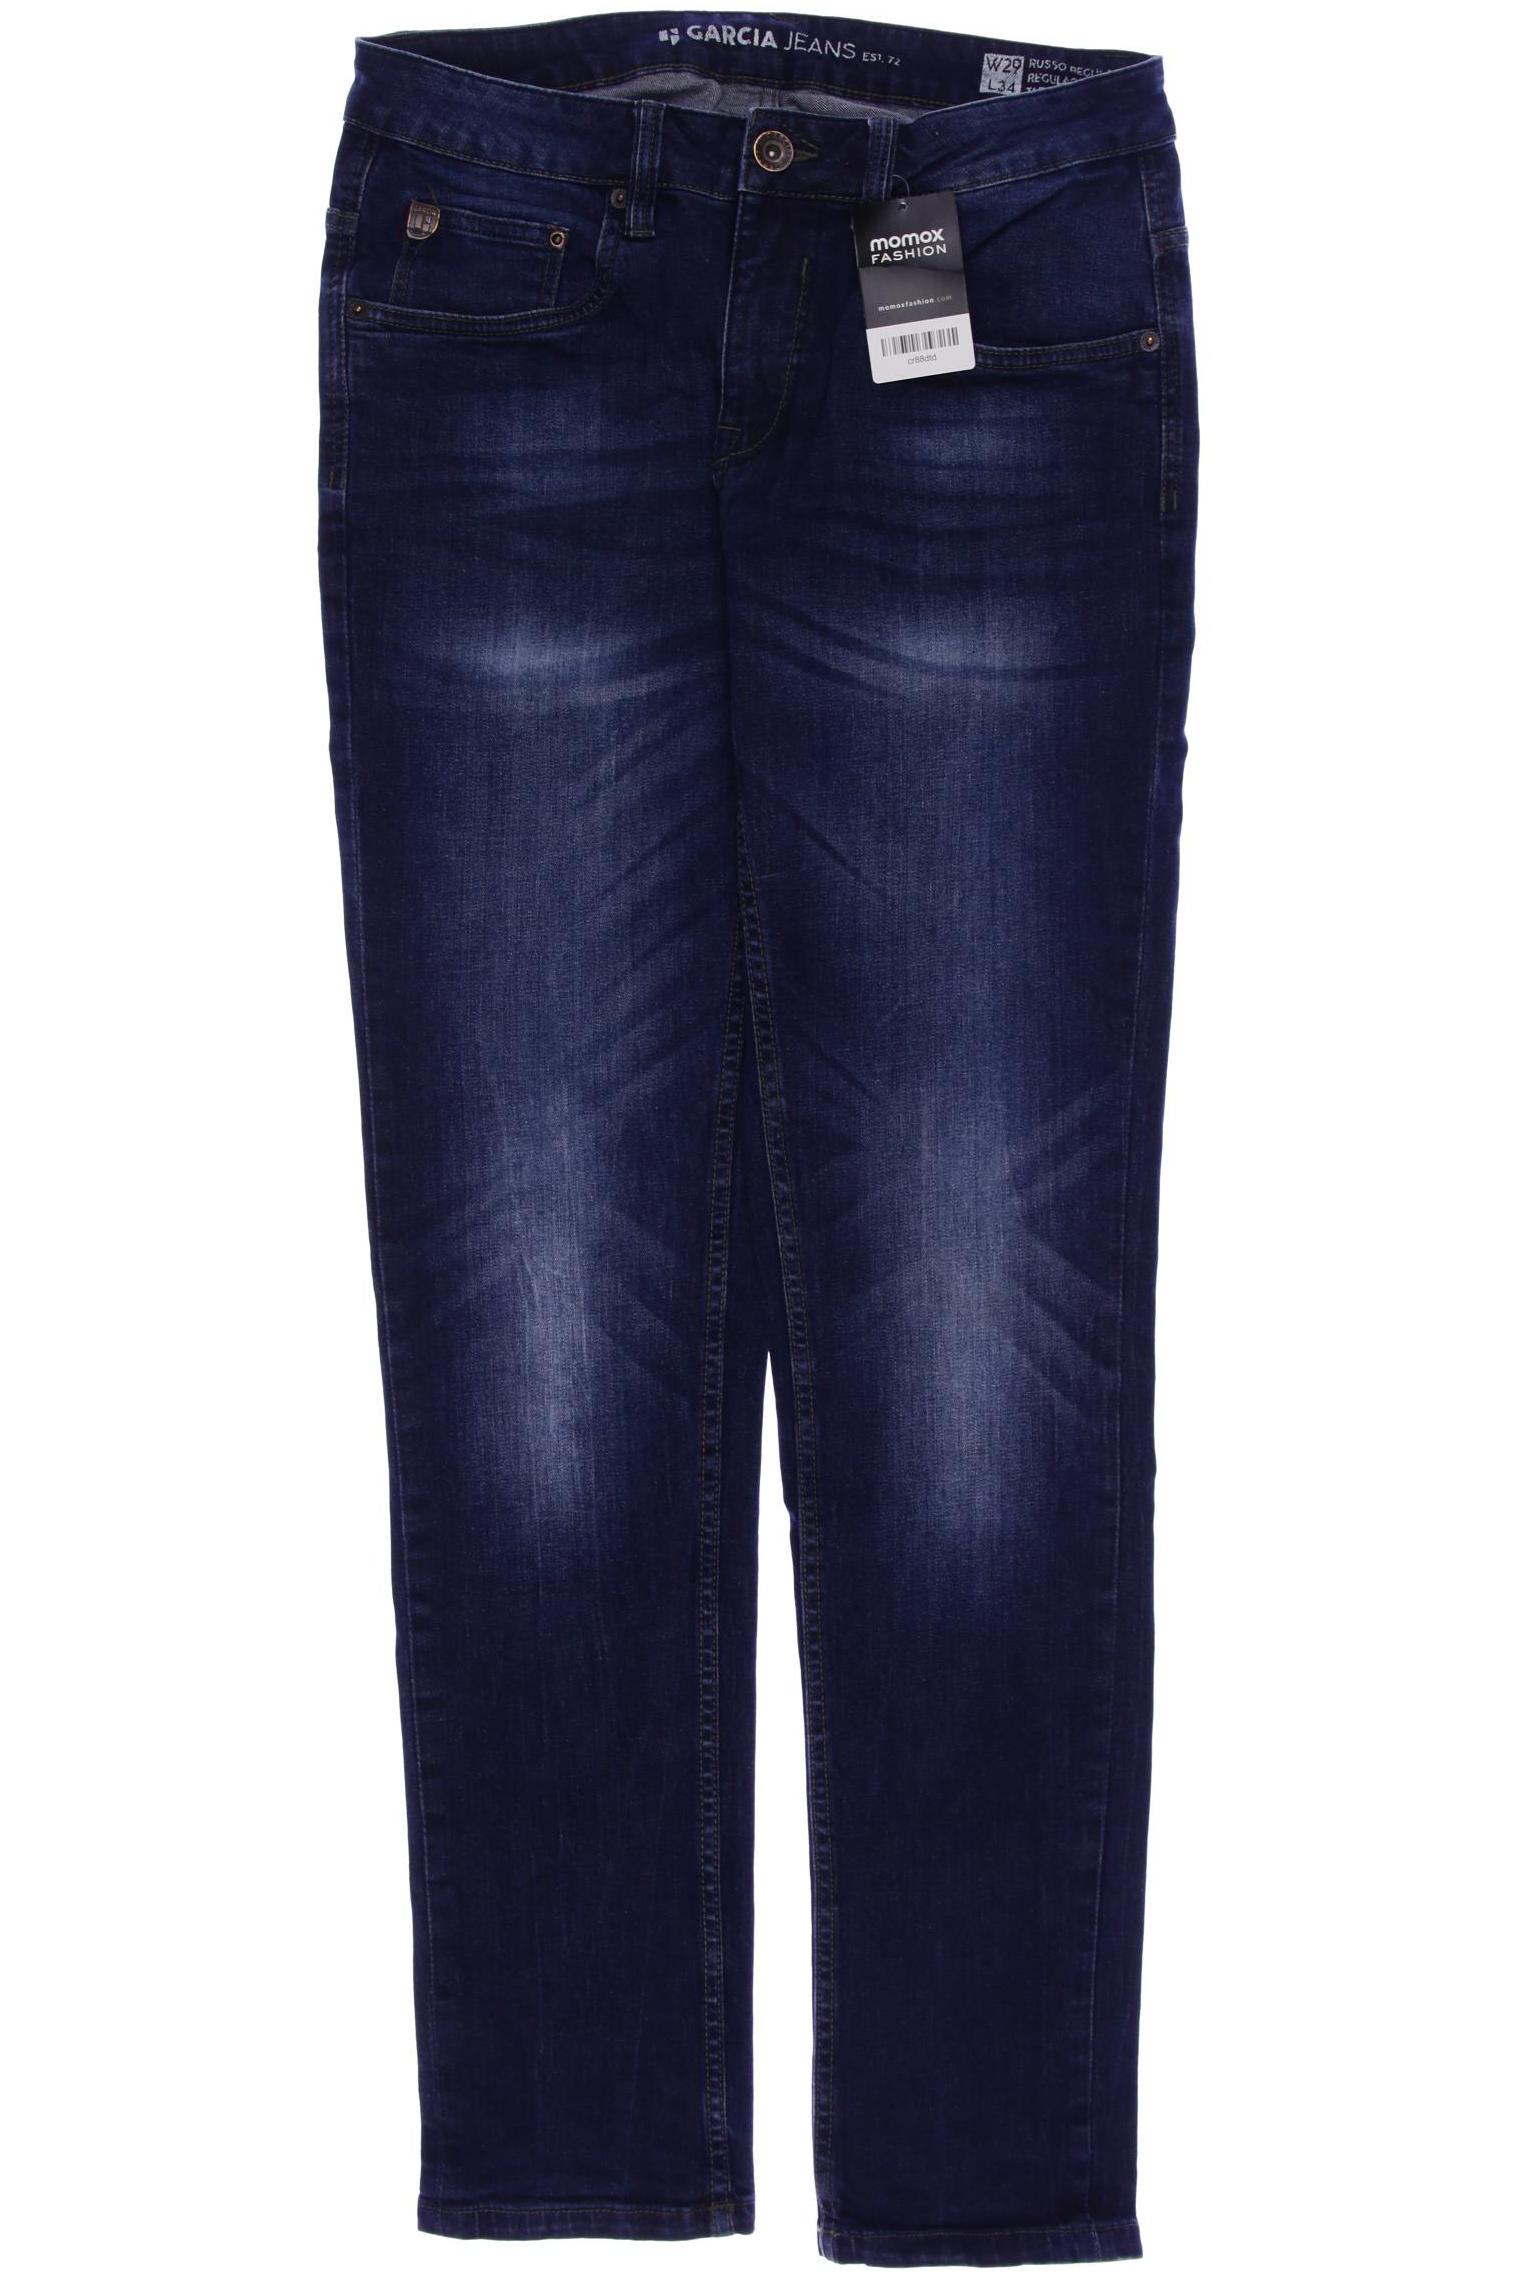 GARCIA Herren Jeans, marineblau von GARCIA